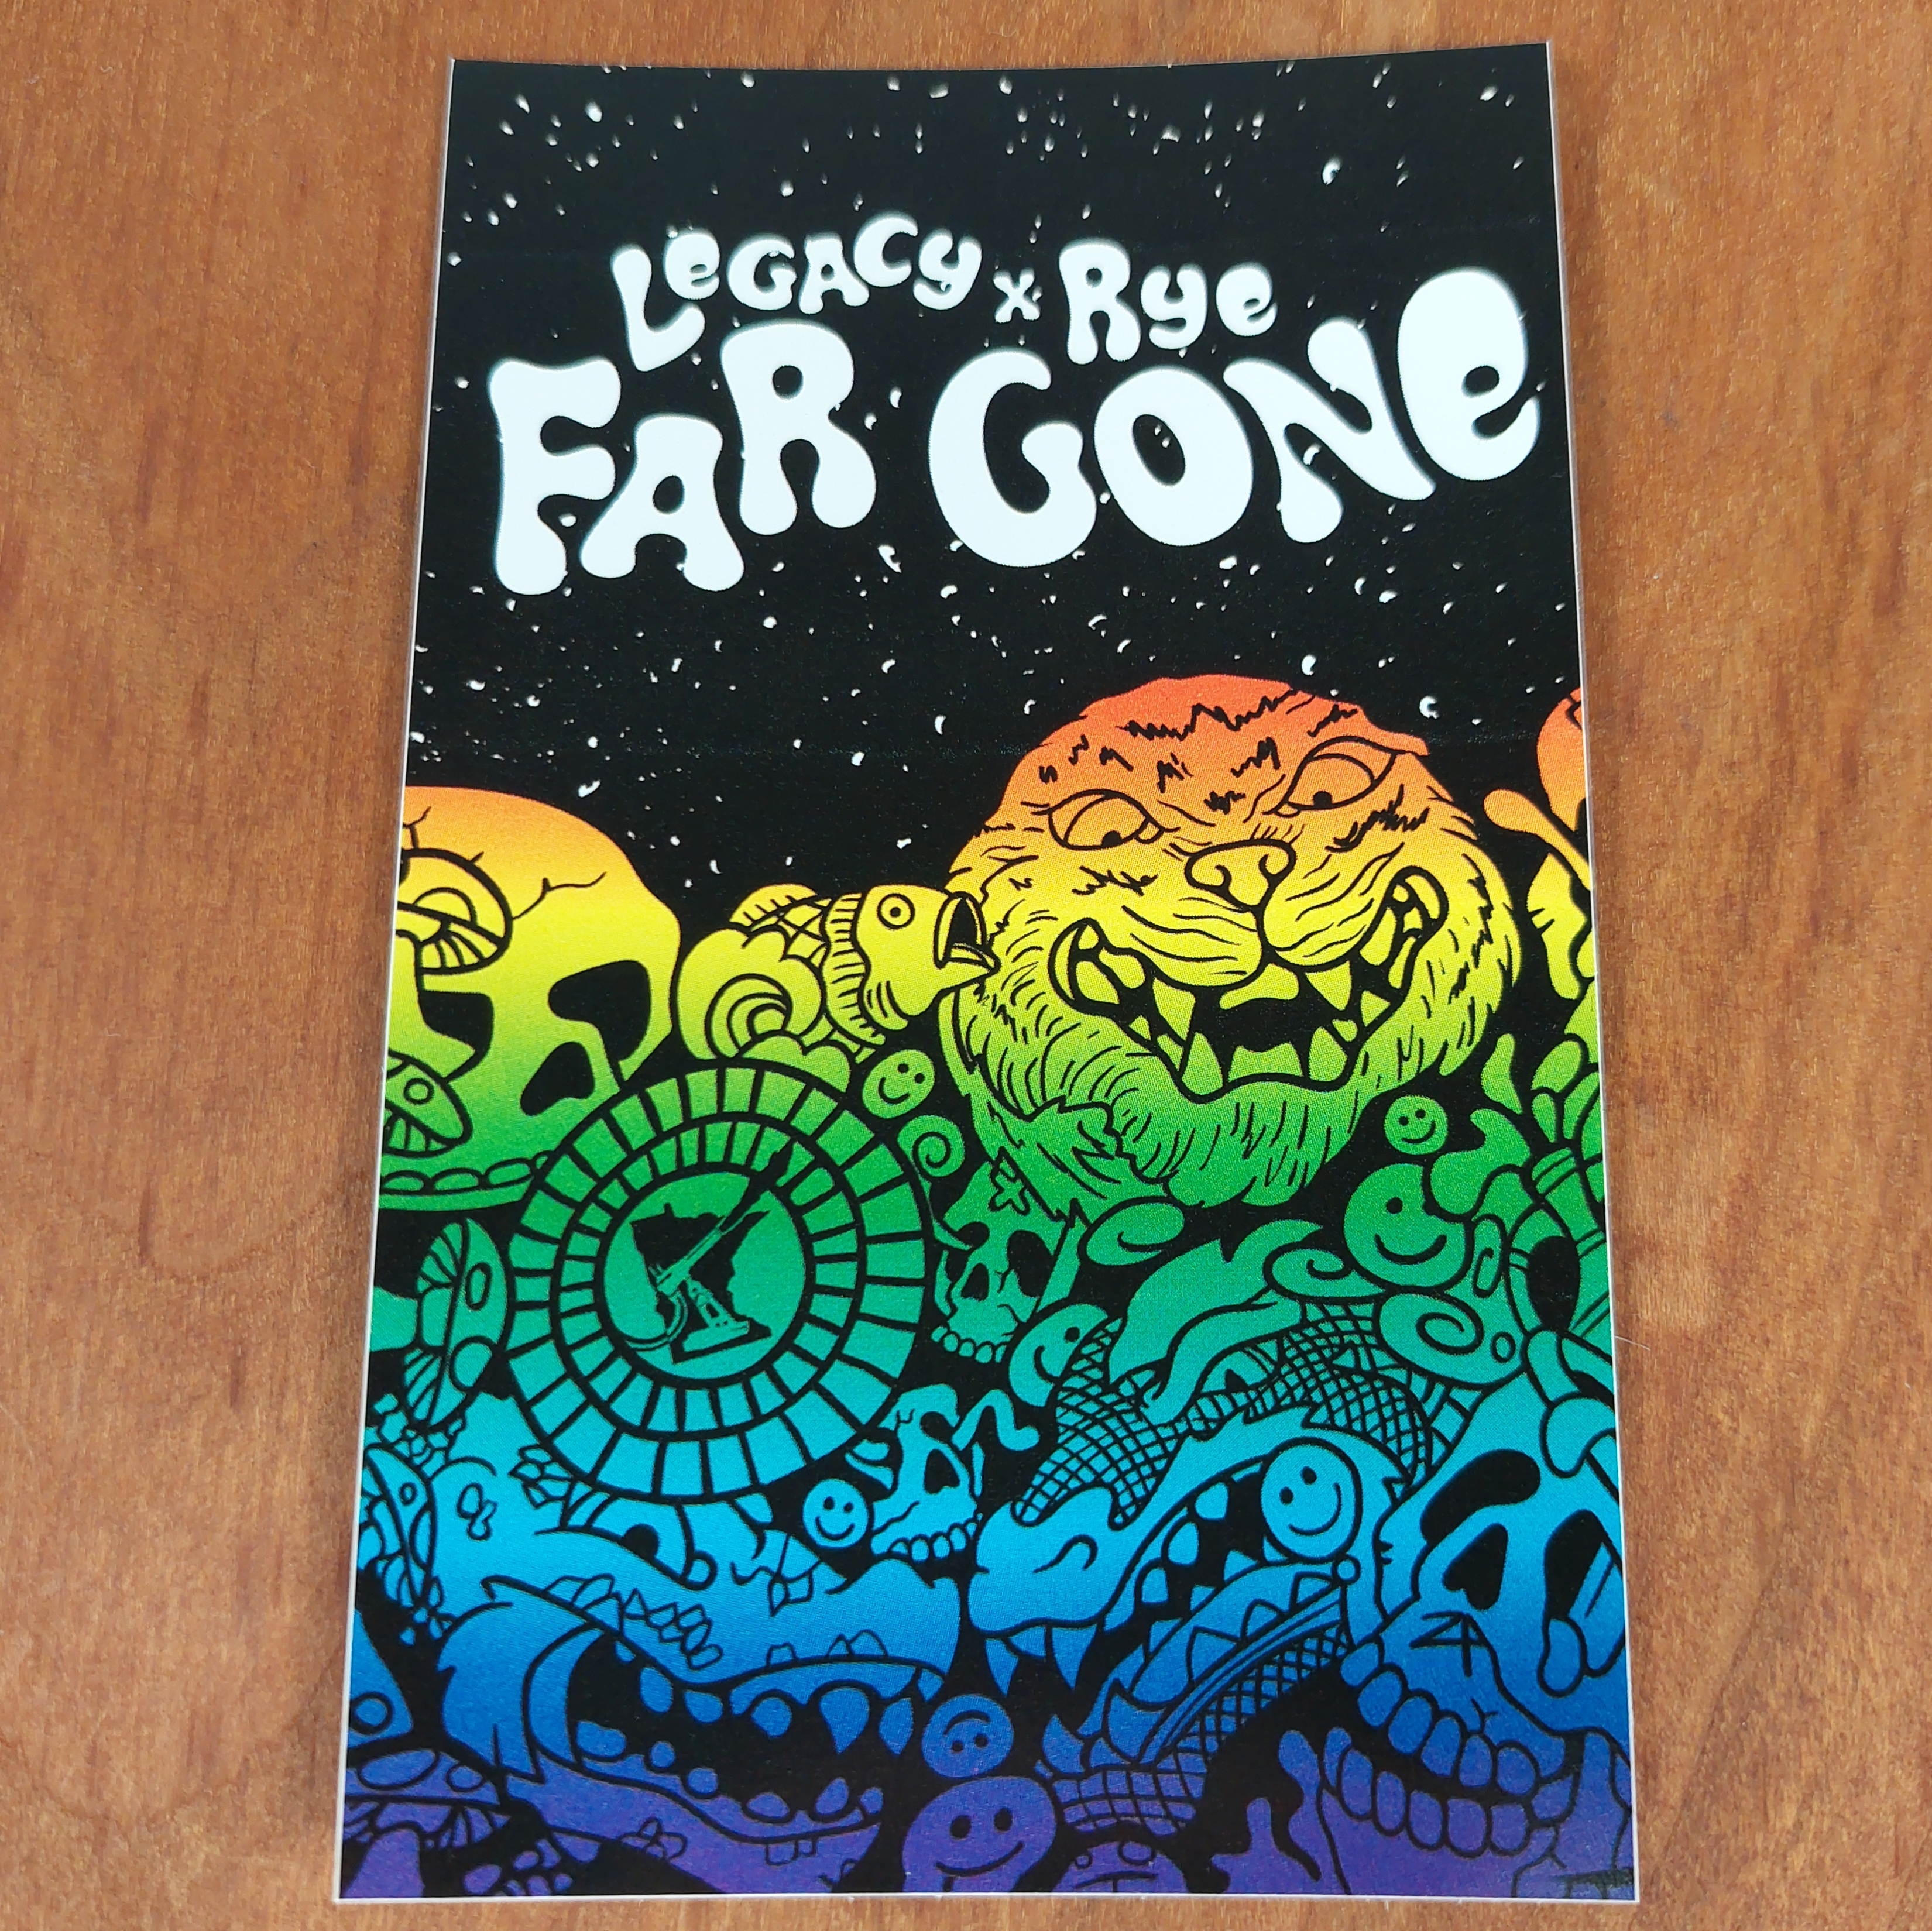 Rye "Far Gone" Sticker